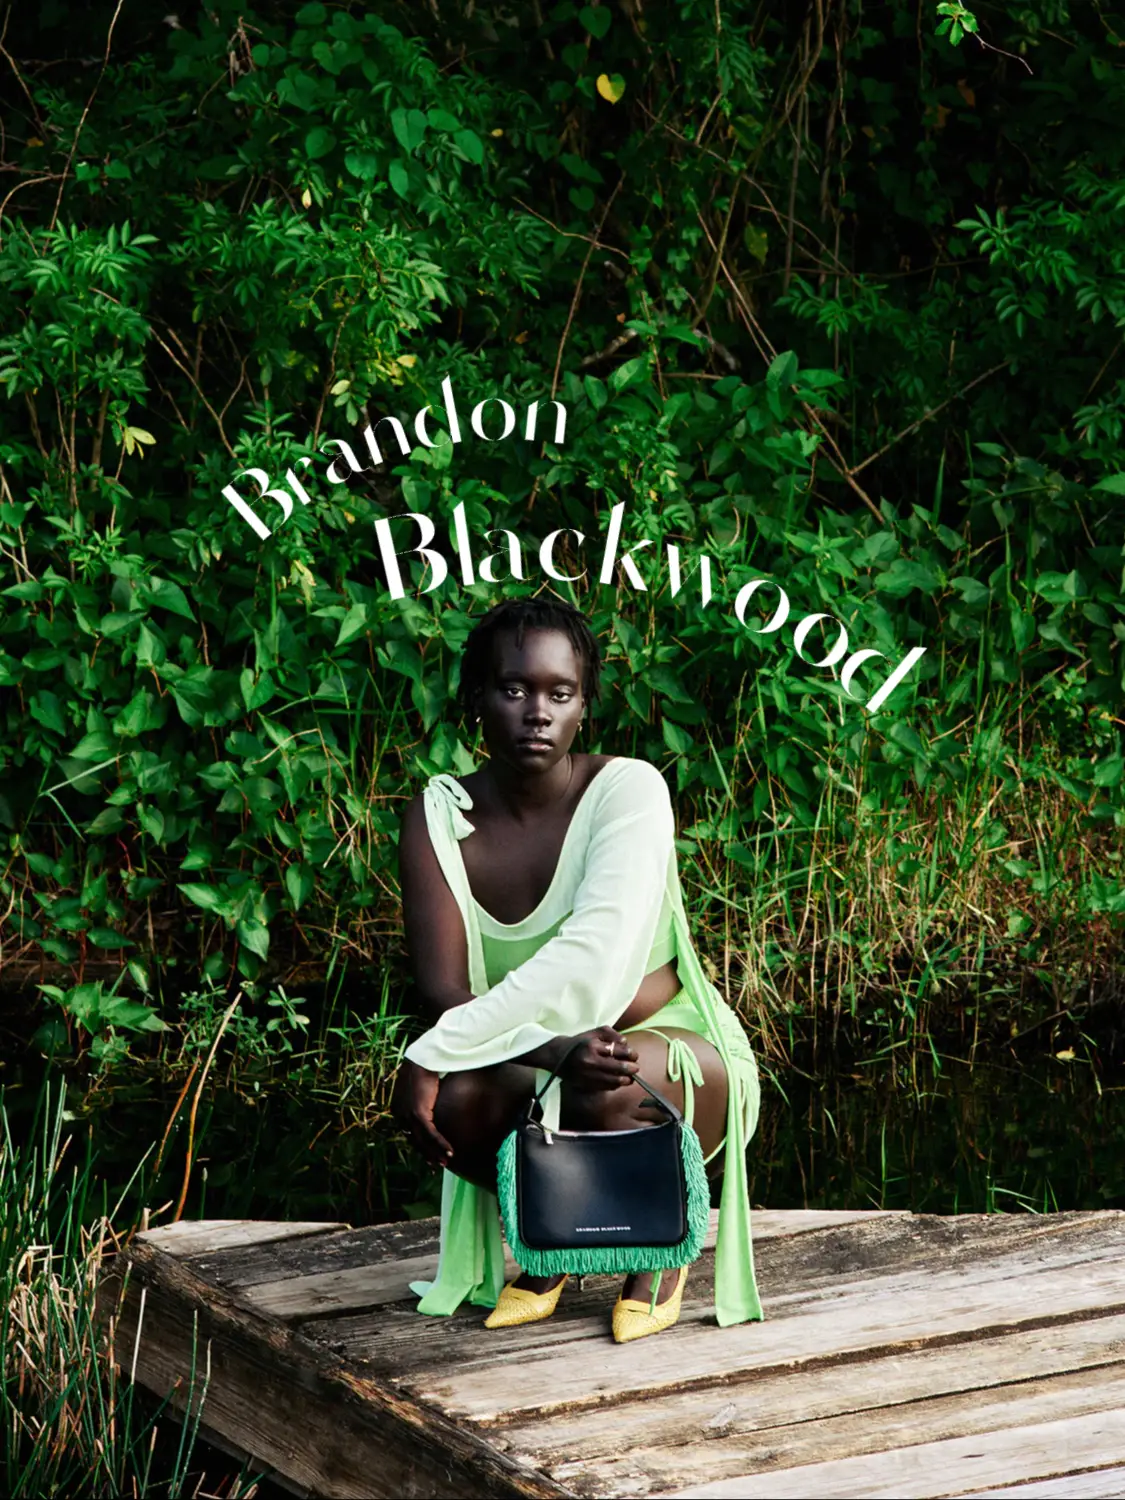 Brandon Blackwood on His Affordable Luxury Handbag Brand